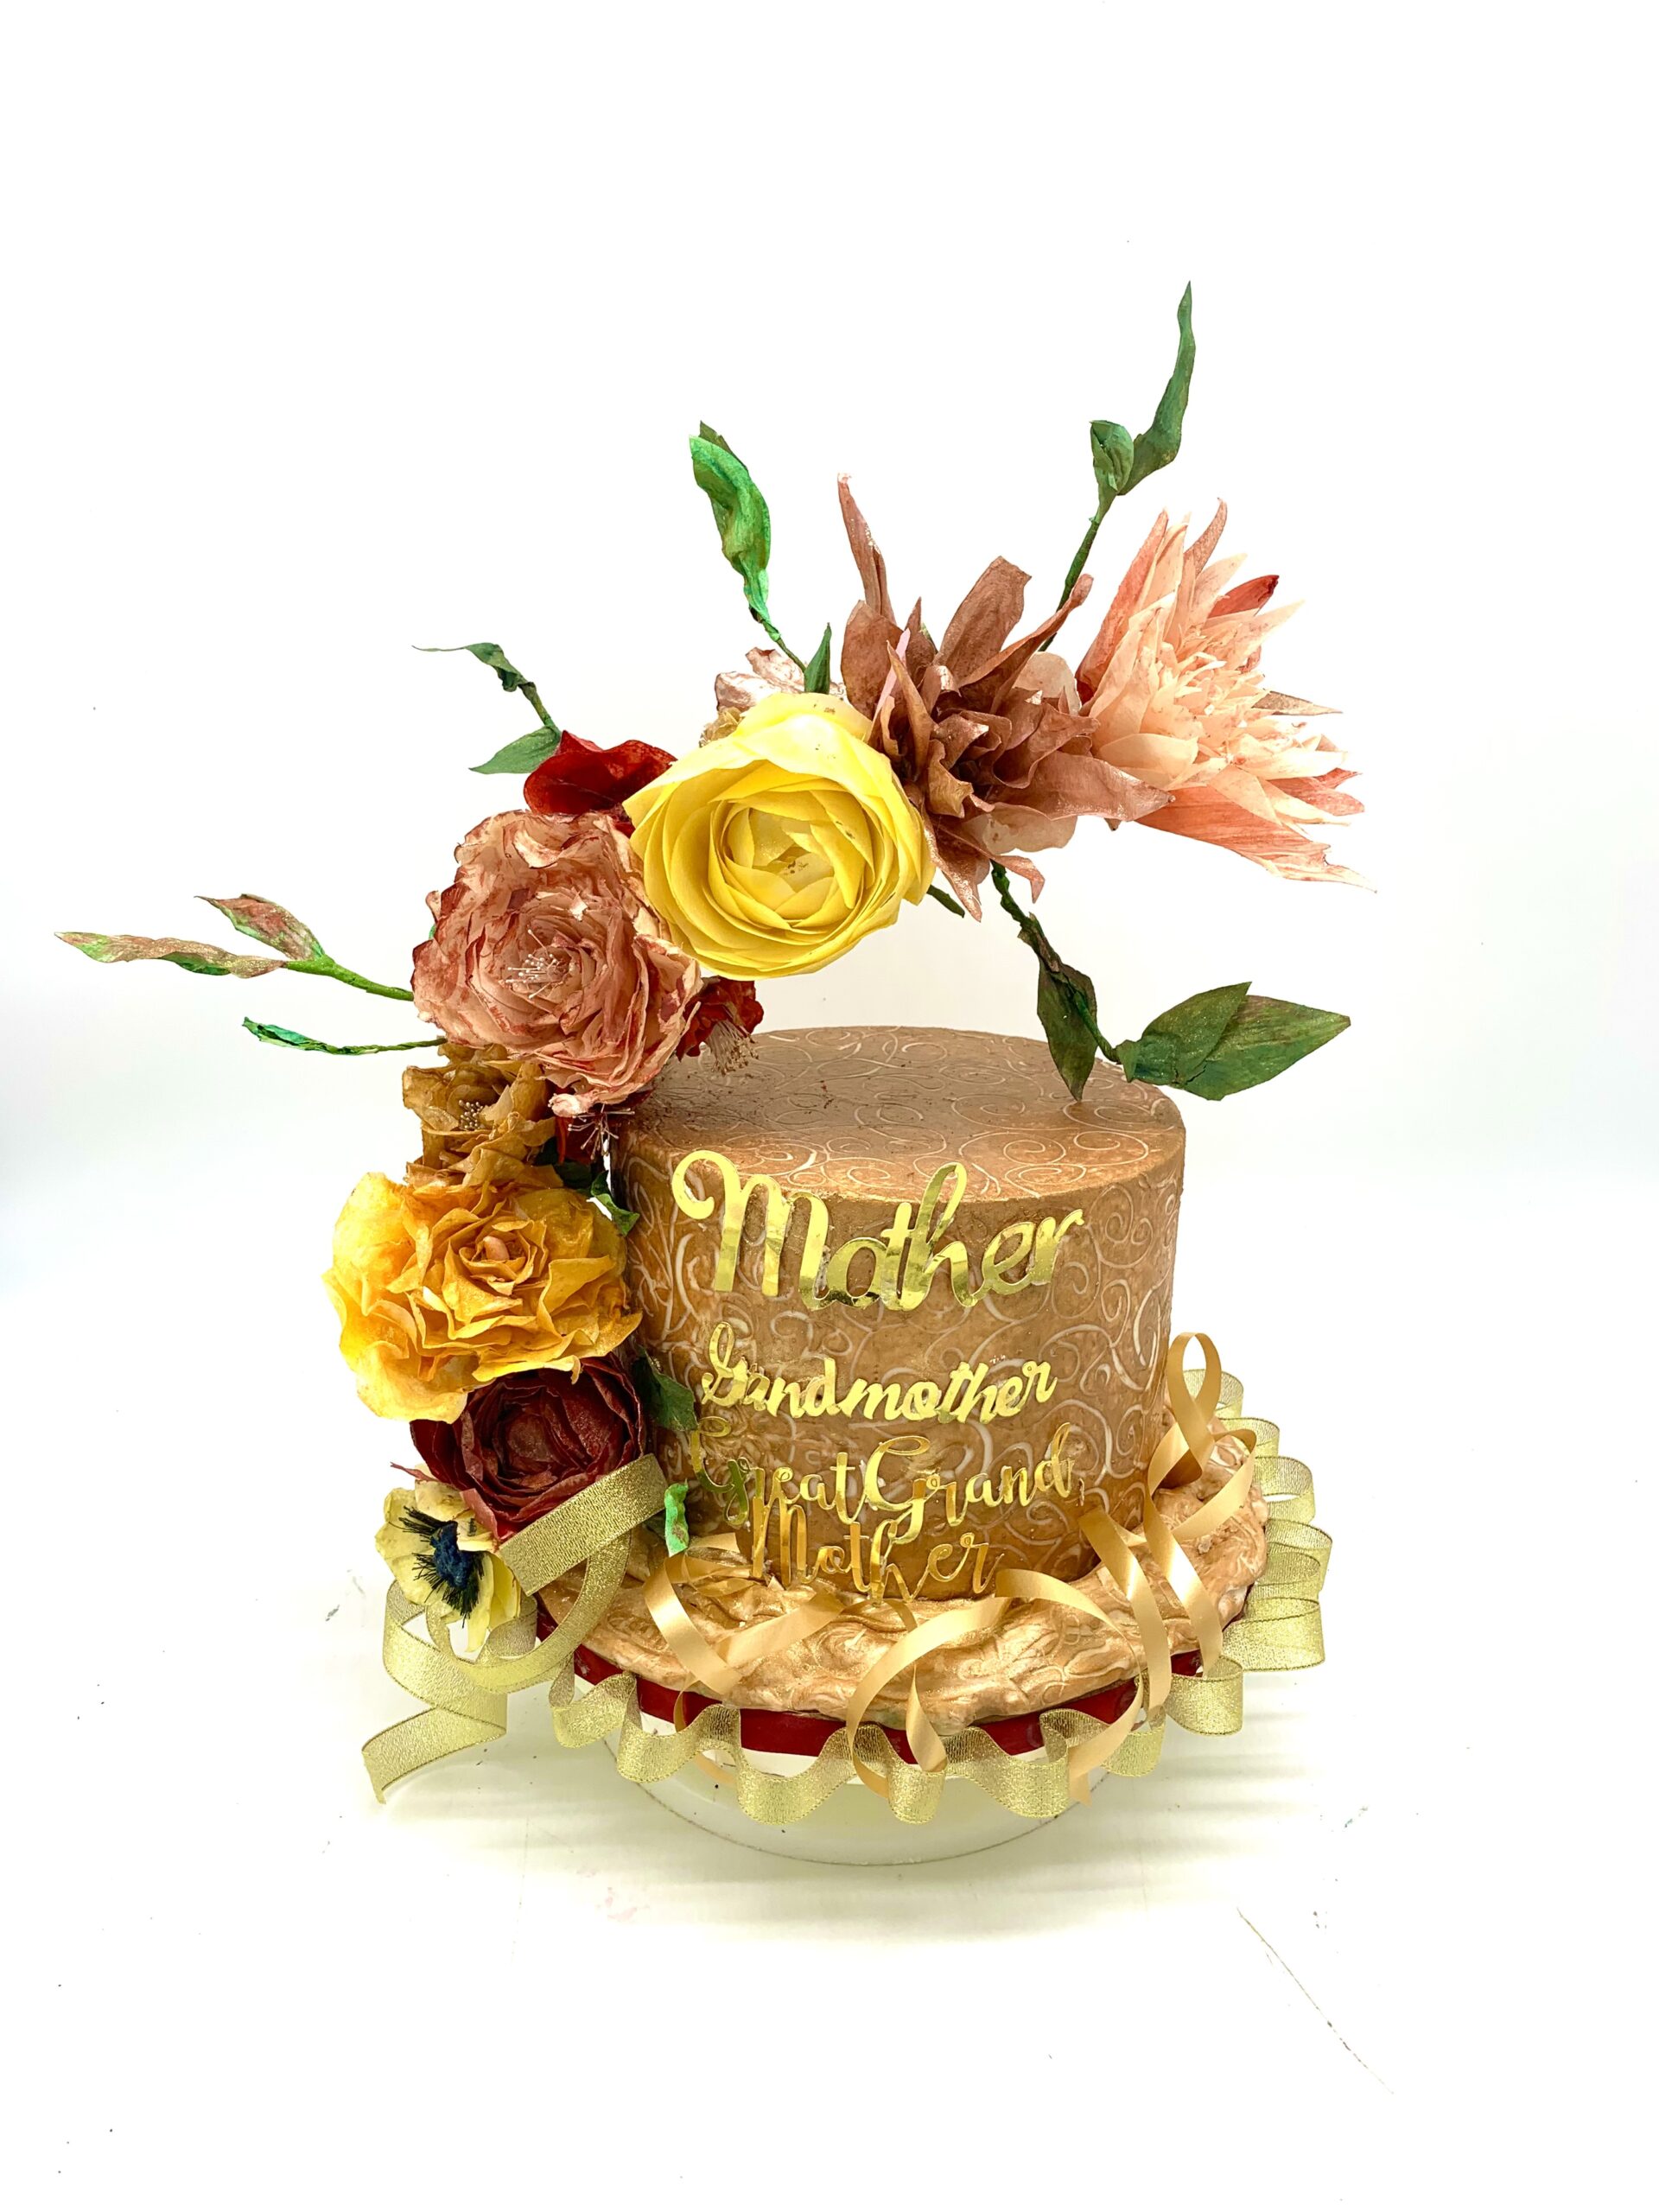 Tracey Mckay - Woodland Wedding Cake - November 2022